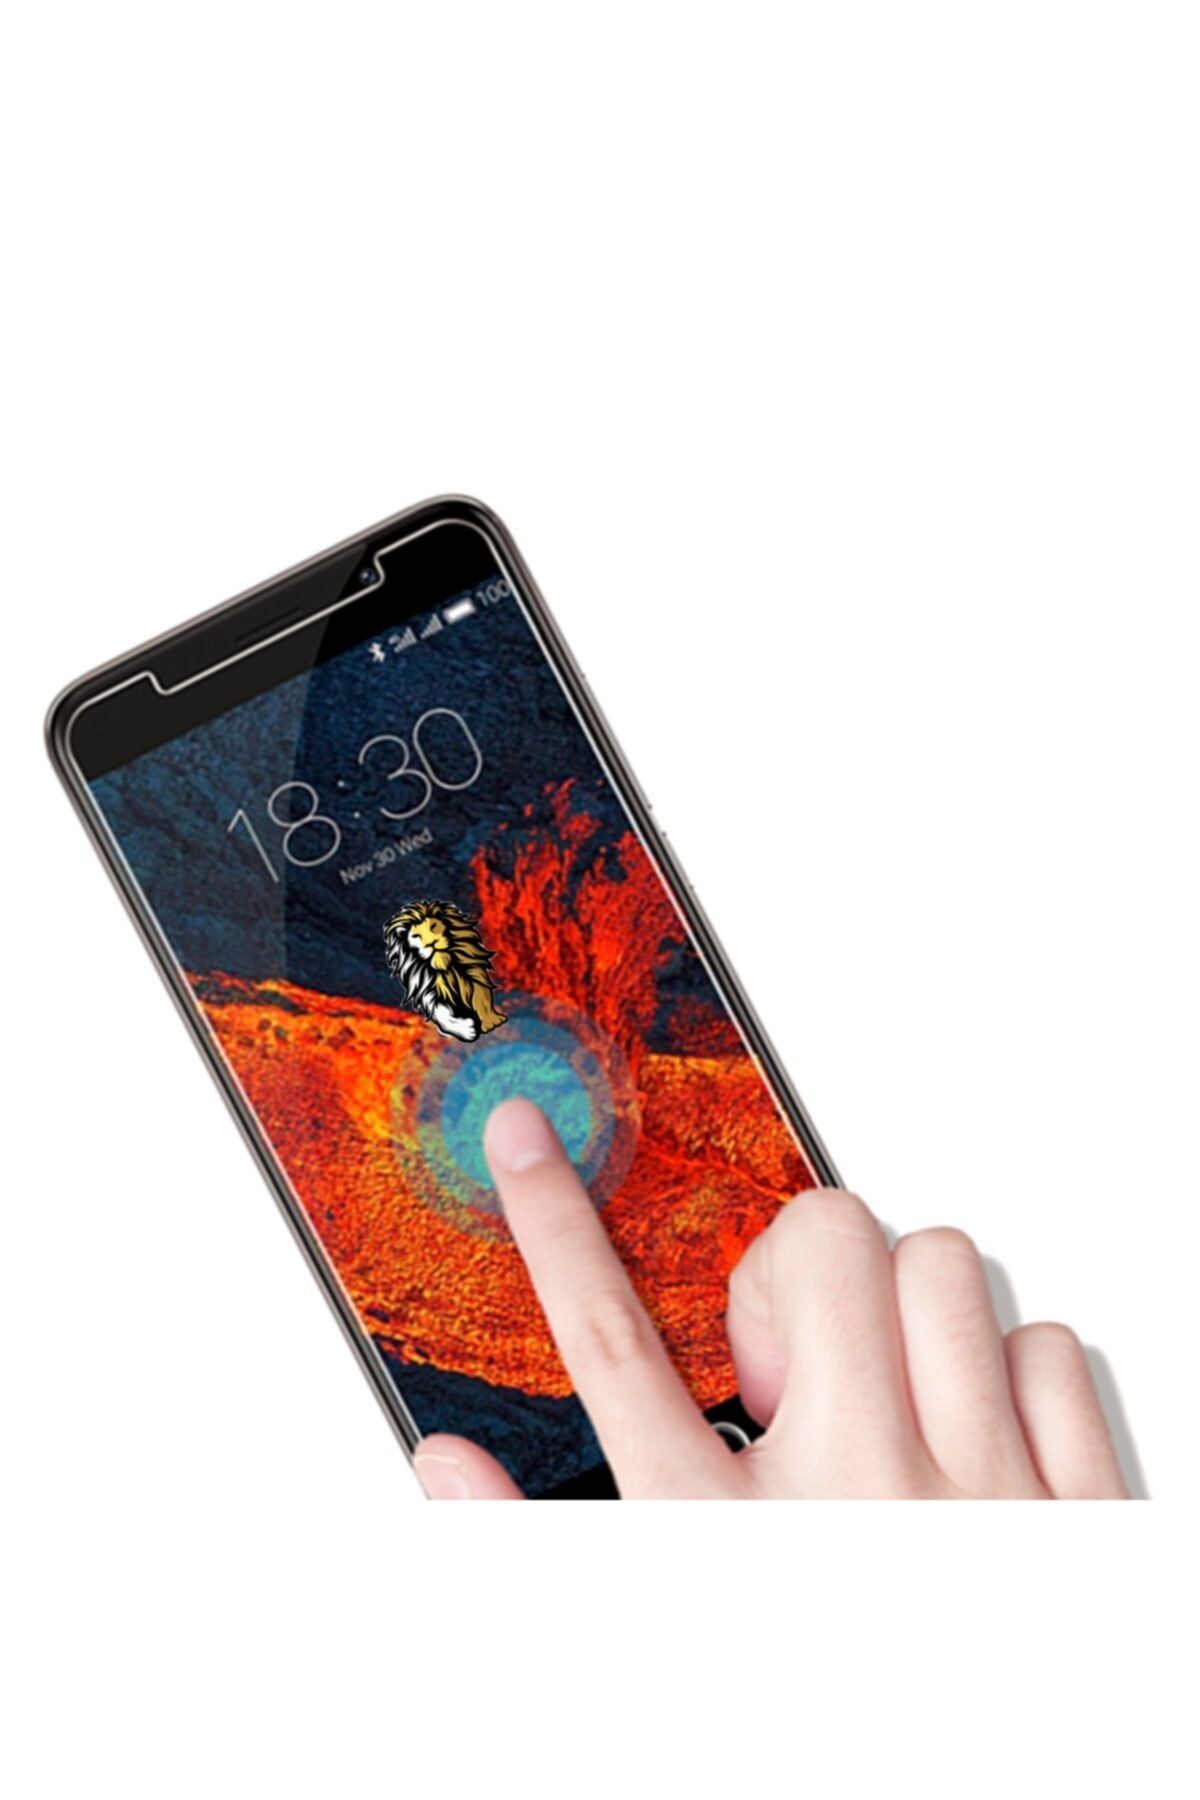 ucuzmi Huawei Mate10 Lite Nano Ekran Koruyucu Film Kırılmaz Cam Çizilmez Özellik 9h Hd Ekran Koruma